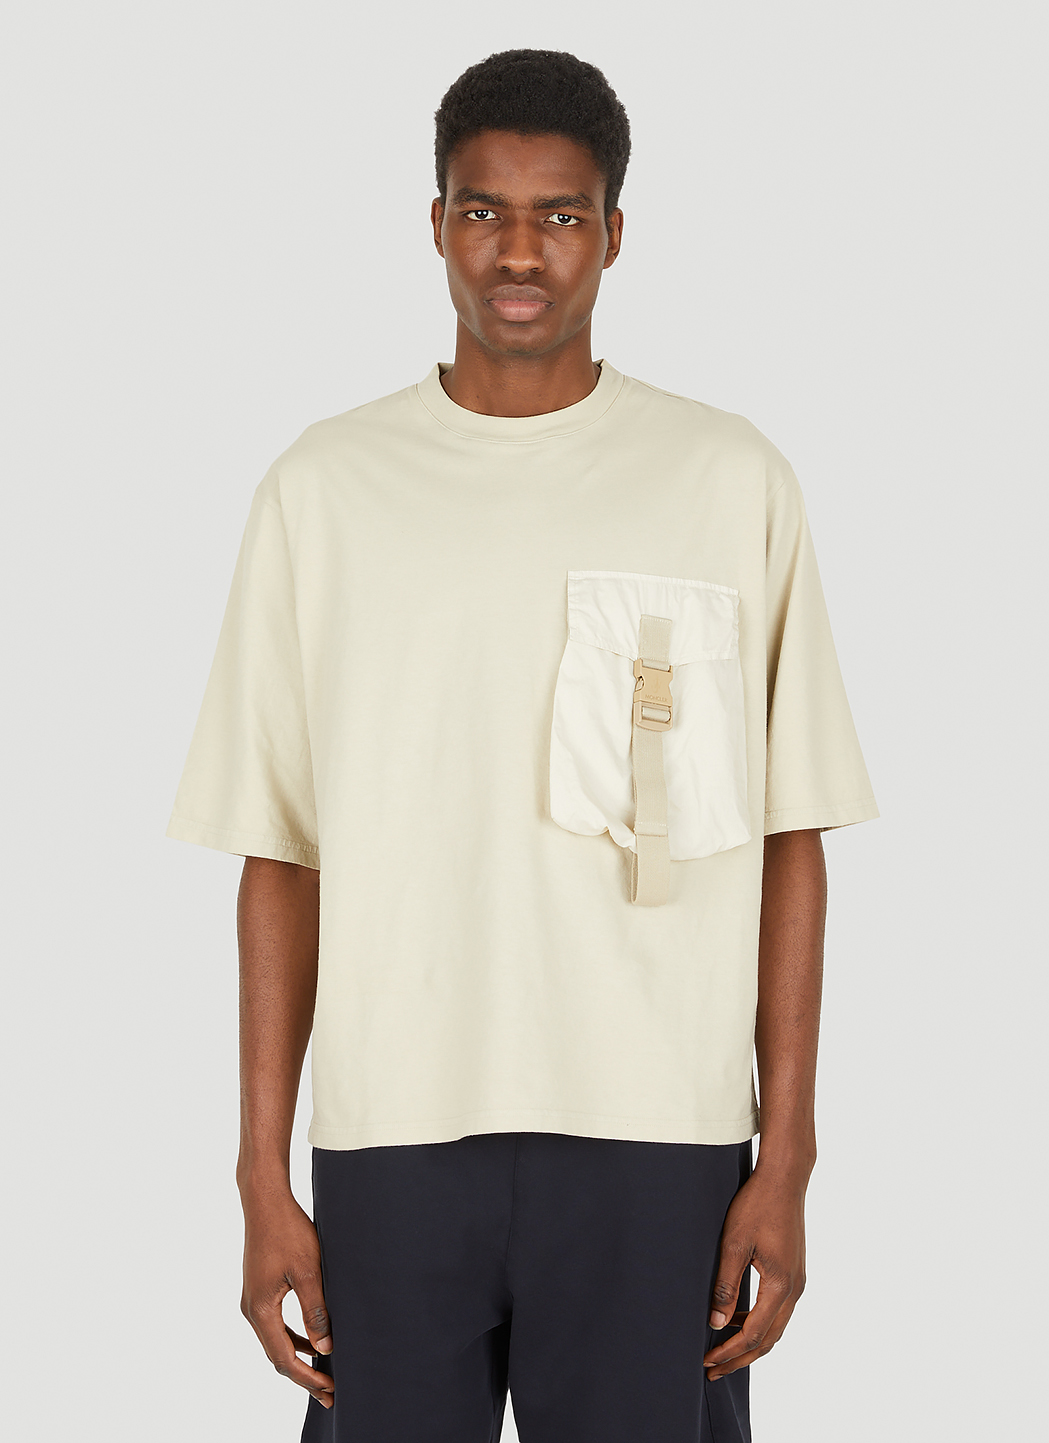 Buckle Pocket T-Shirt